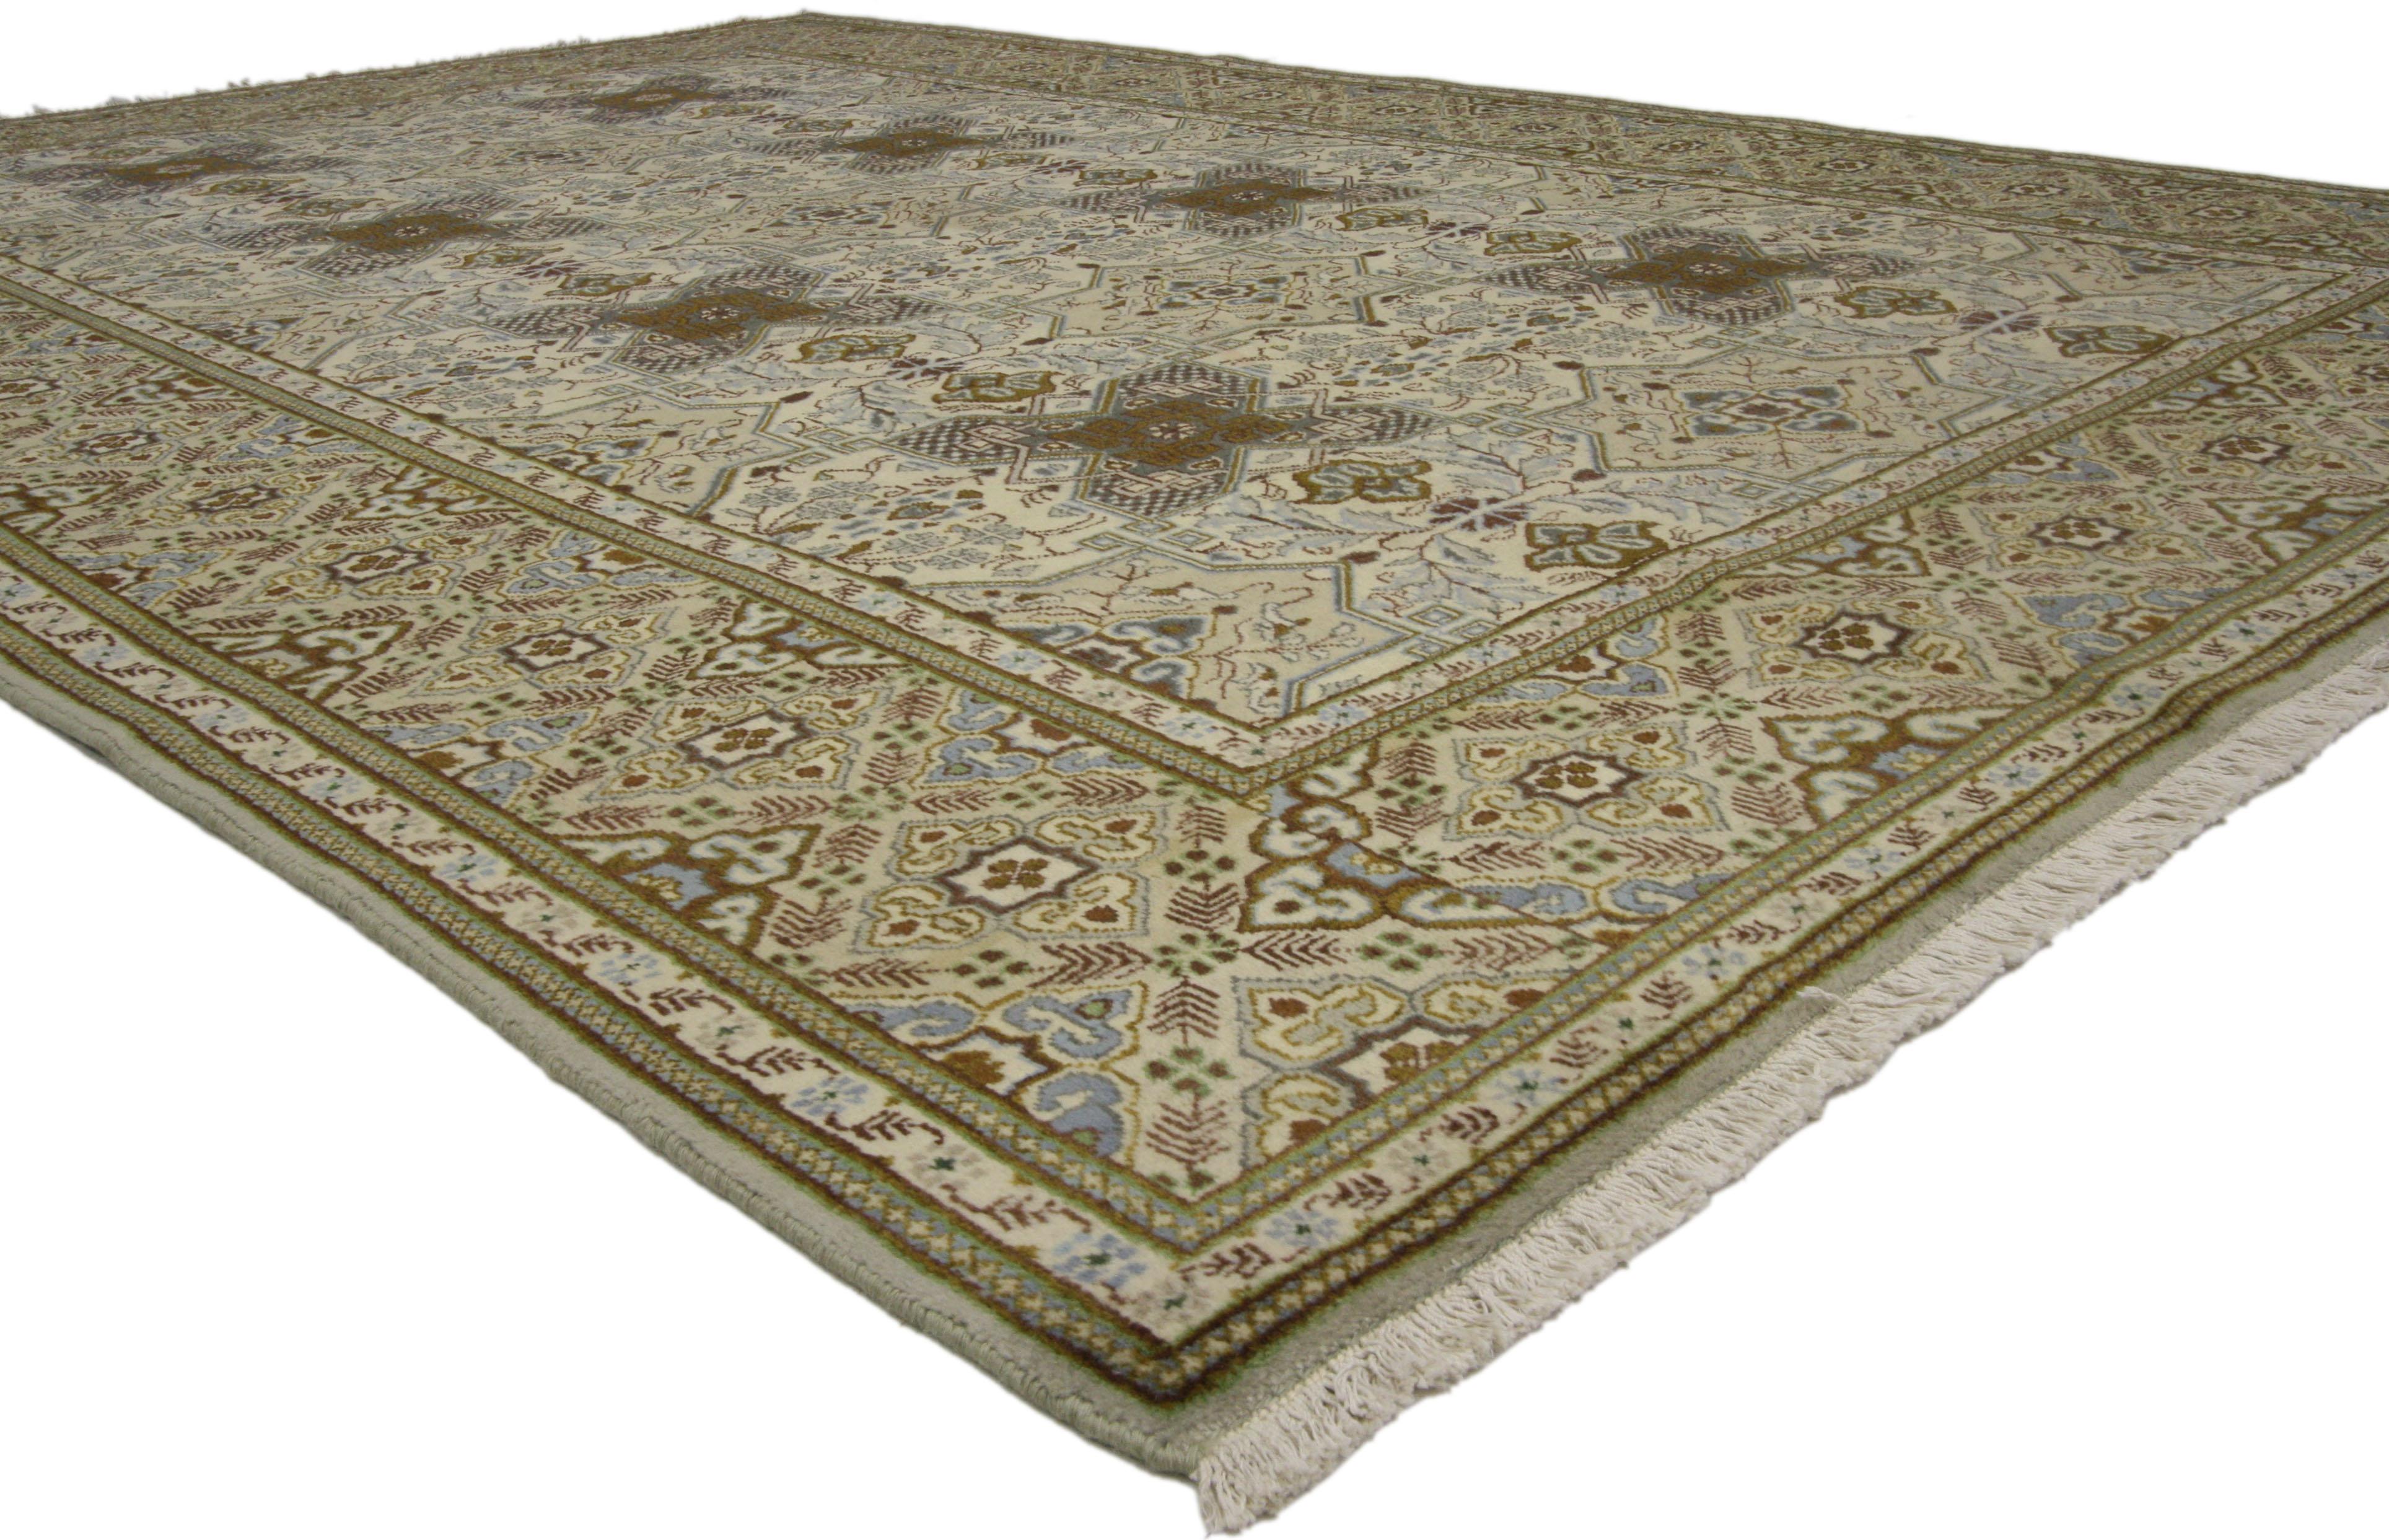 Hand-Knotted Vintage Persian Tabriz Rug with Islamic Quatrefoil Tile Art Work Design For Sale